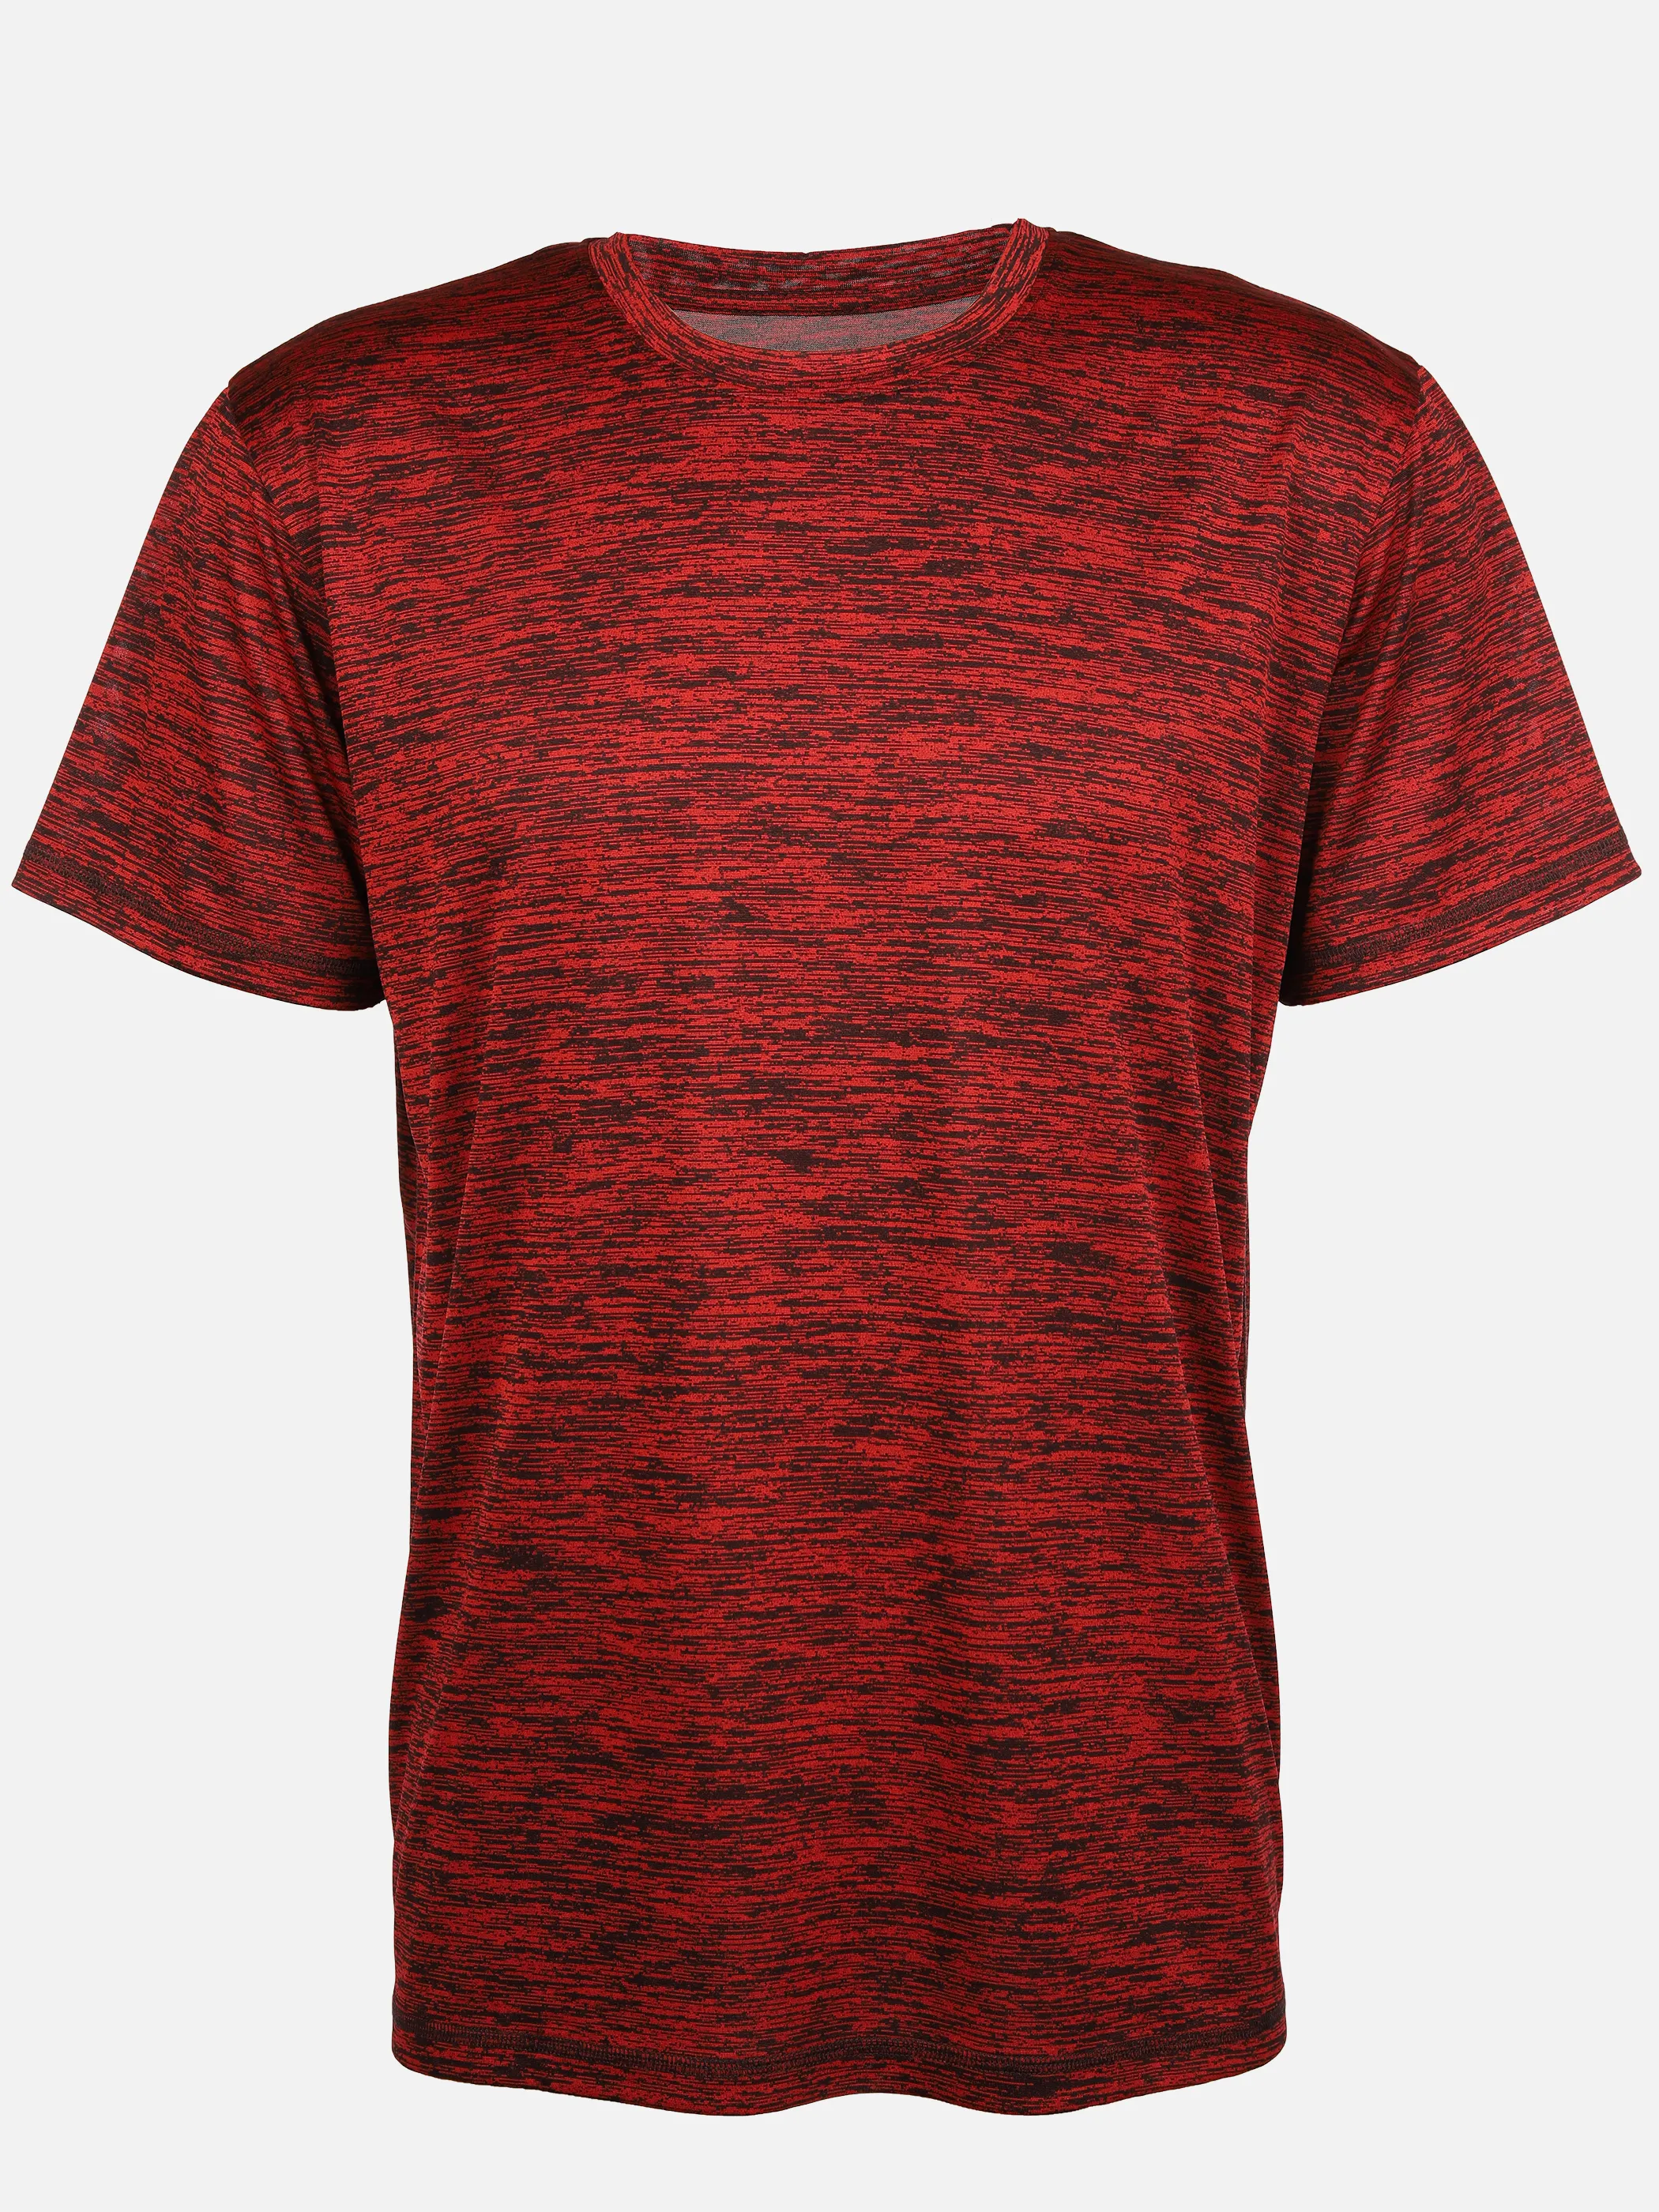 Grinario Sports He- Sport T-Shirt Rot 890091 RED MEL. 1